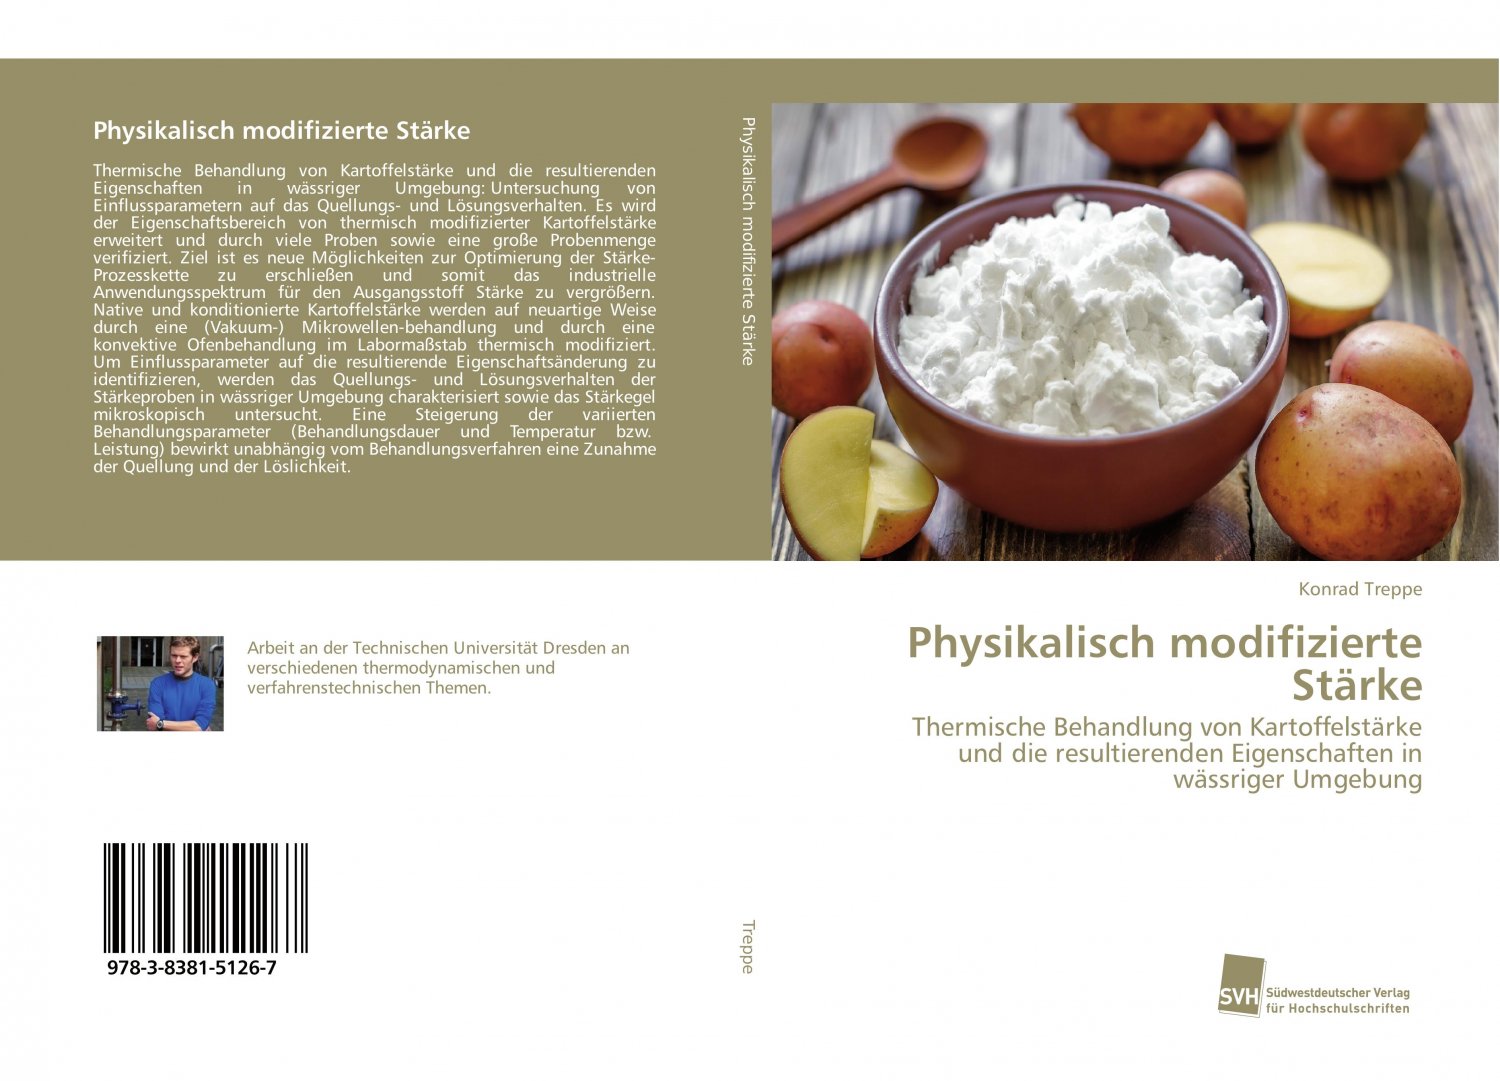 Physikalisch modifizierte Staerke“ (Konrad Treppe) – Buch neu